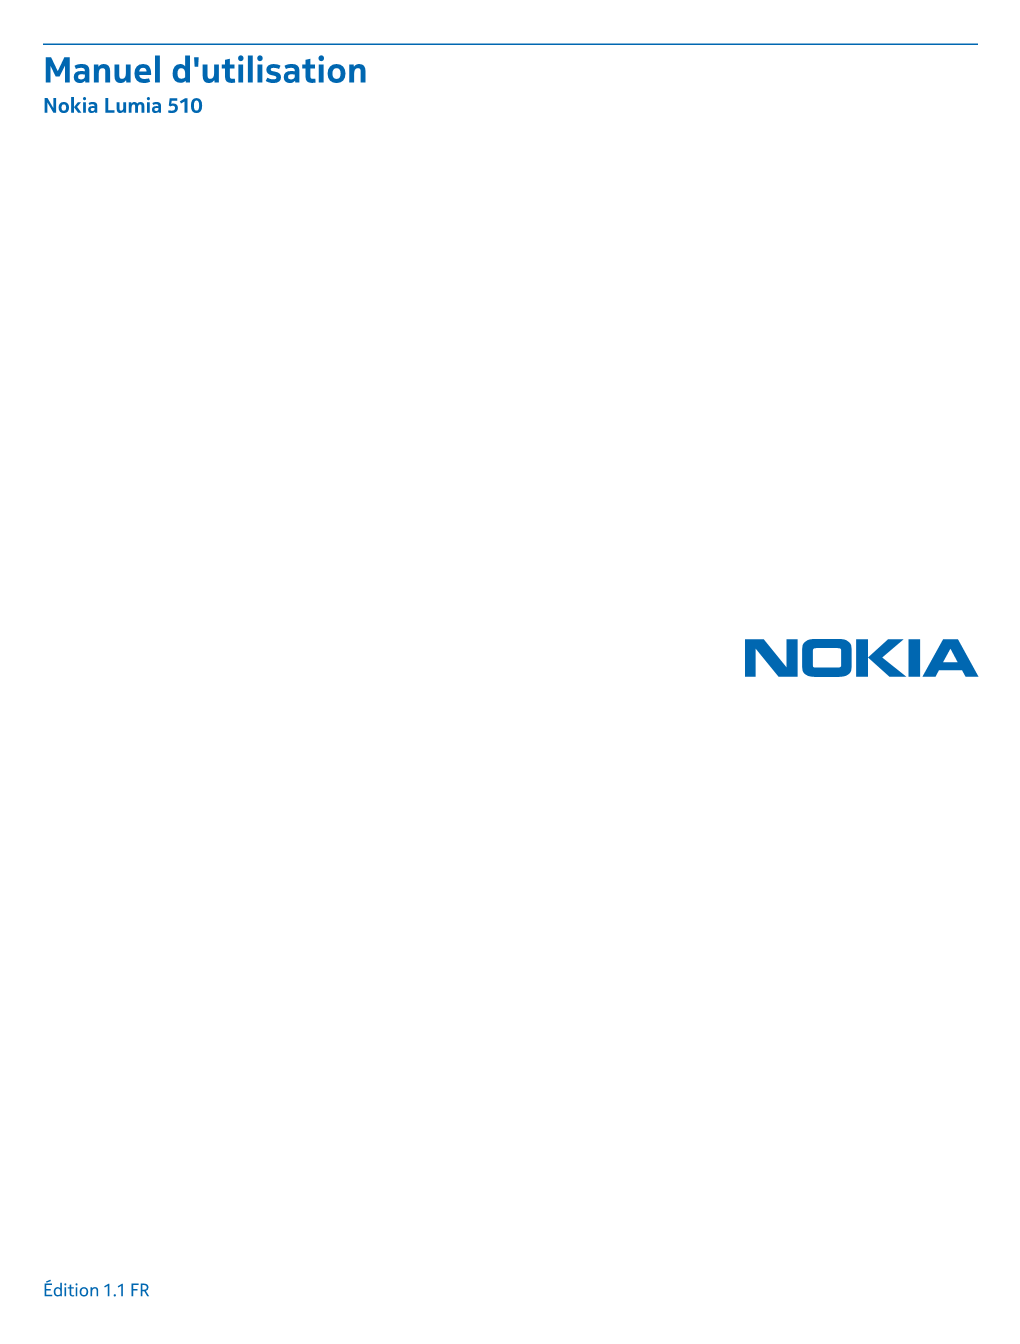 Manuel D'utilisation Nokia Lumia 510